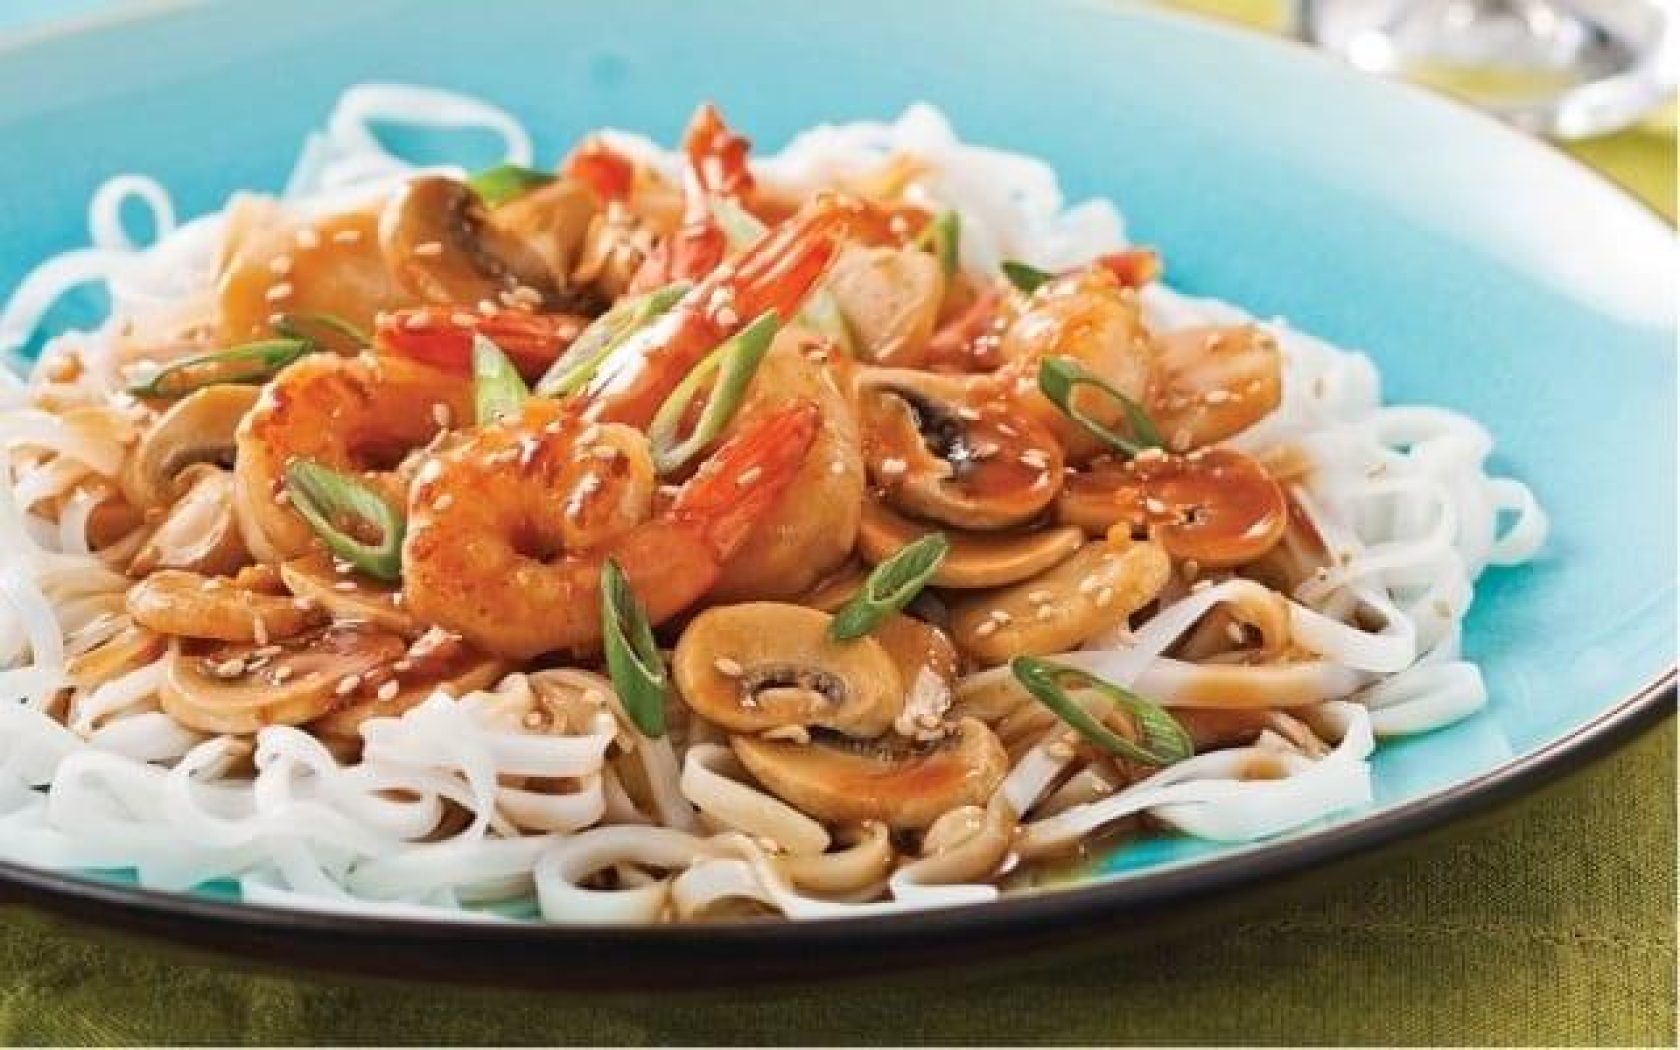 Shrimp Teriyaki Stir-fry with Rice Noodles